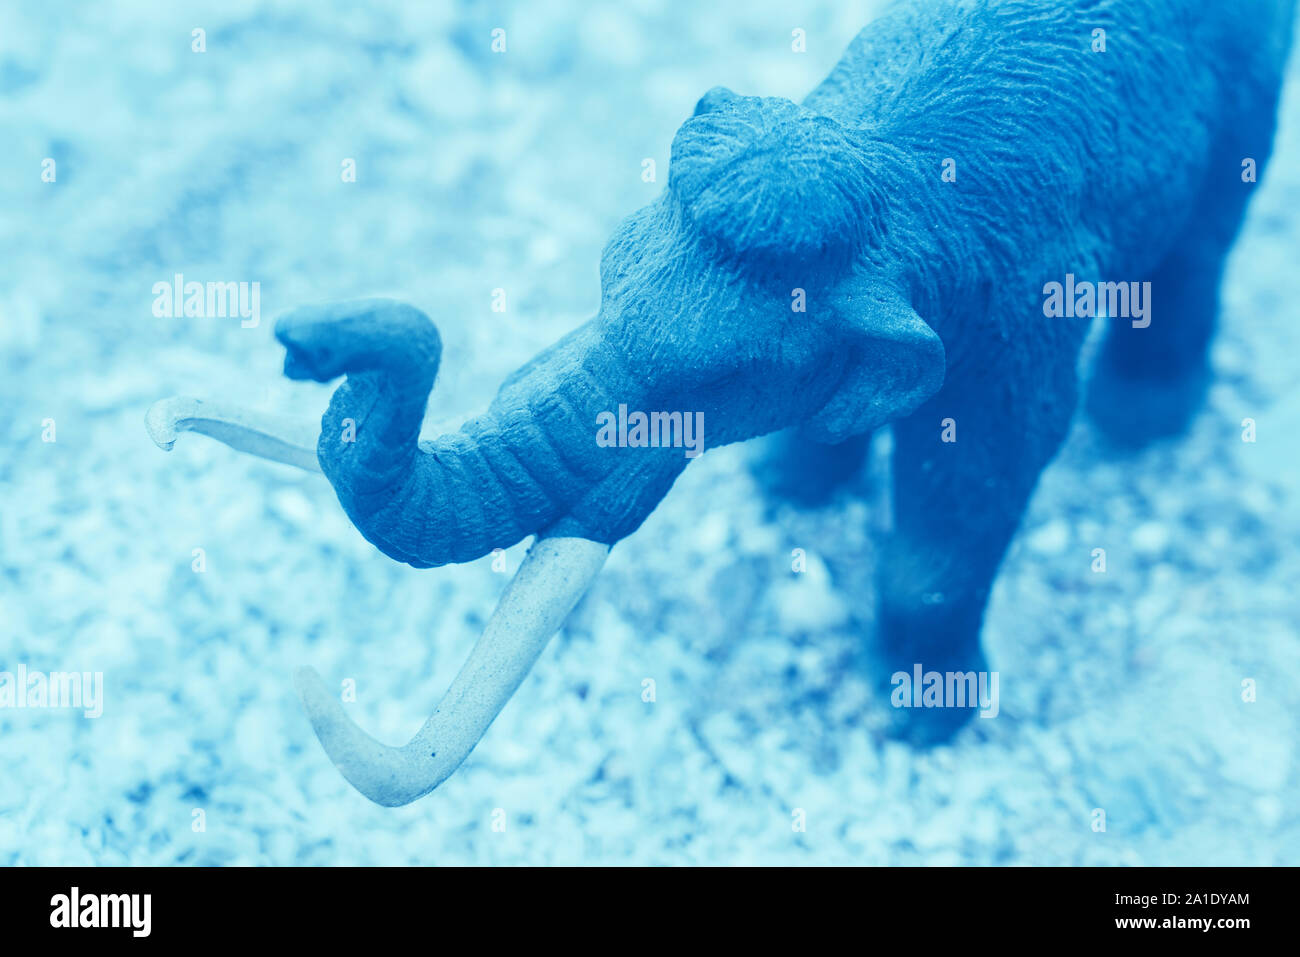 miniature model of a mammoth, birds eye view Stock Photo